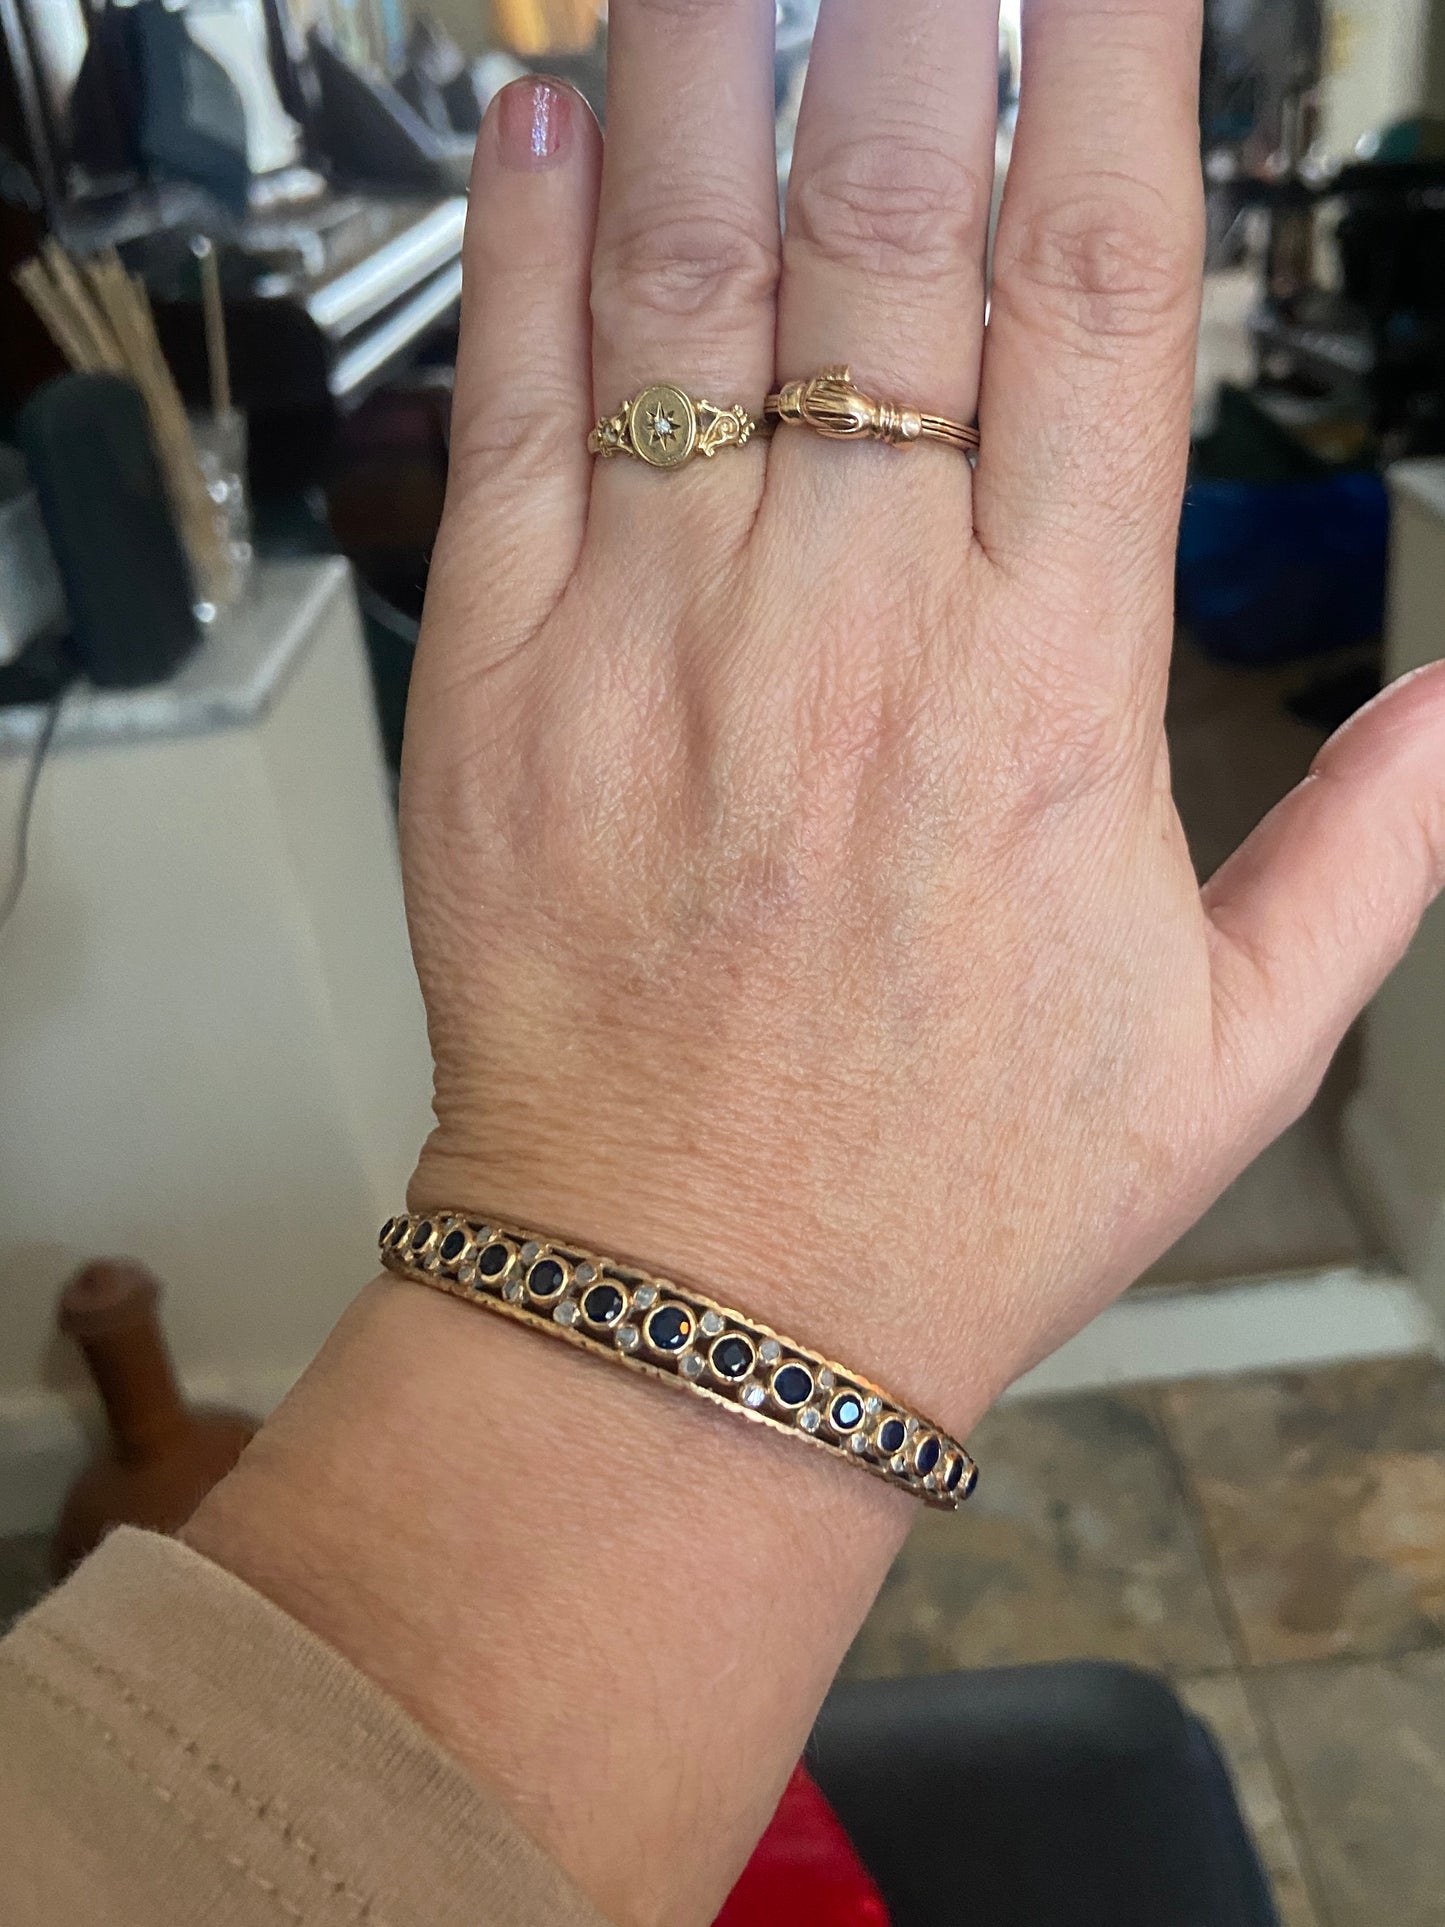 9ct 375 vintage gold sapphire and diamond bracelet circa 1974